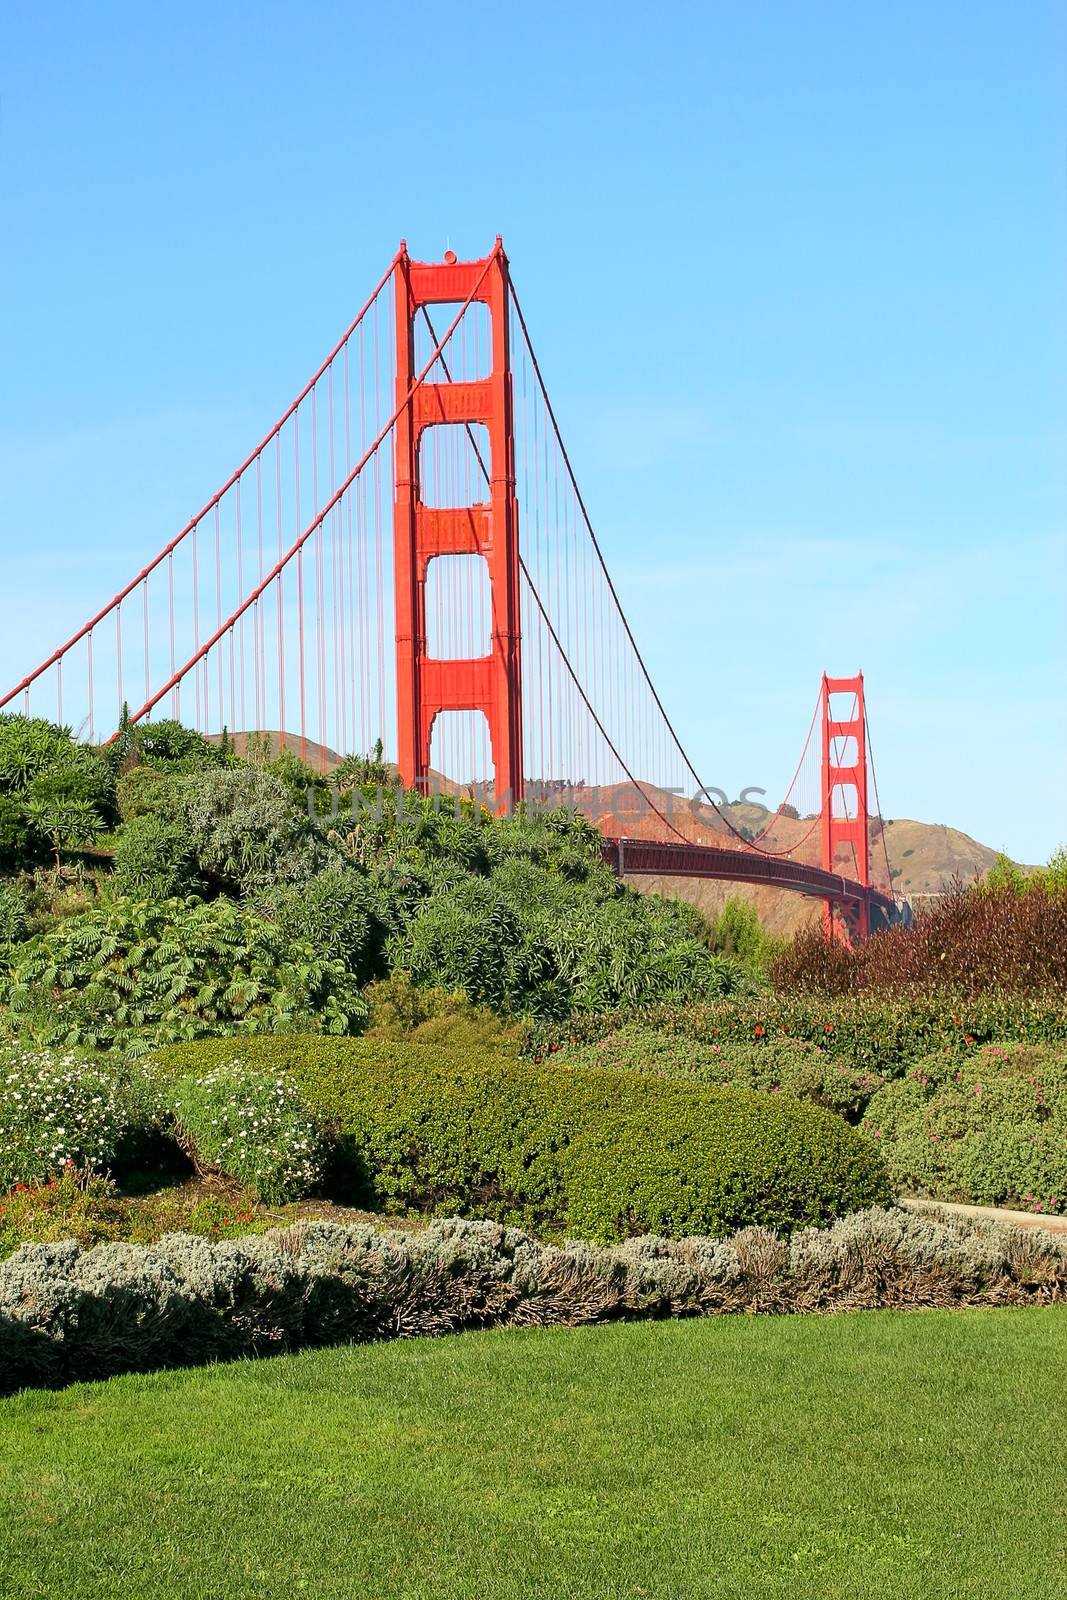 Vertical oriented image of famous Golden Gate Bridge under blue sky in San Francisco, USA.